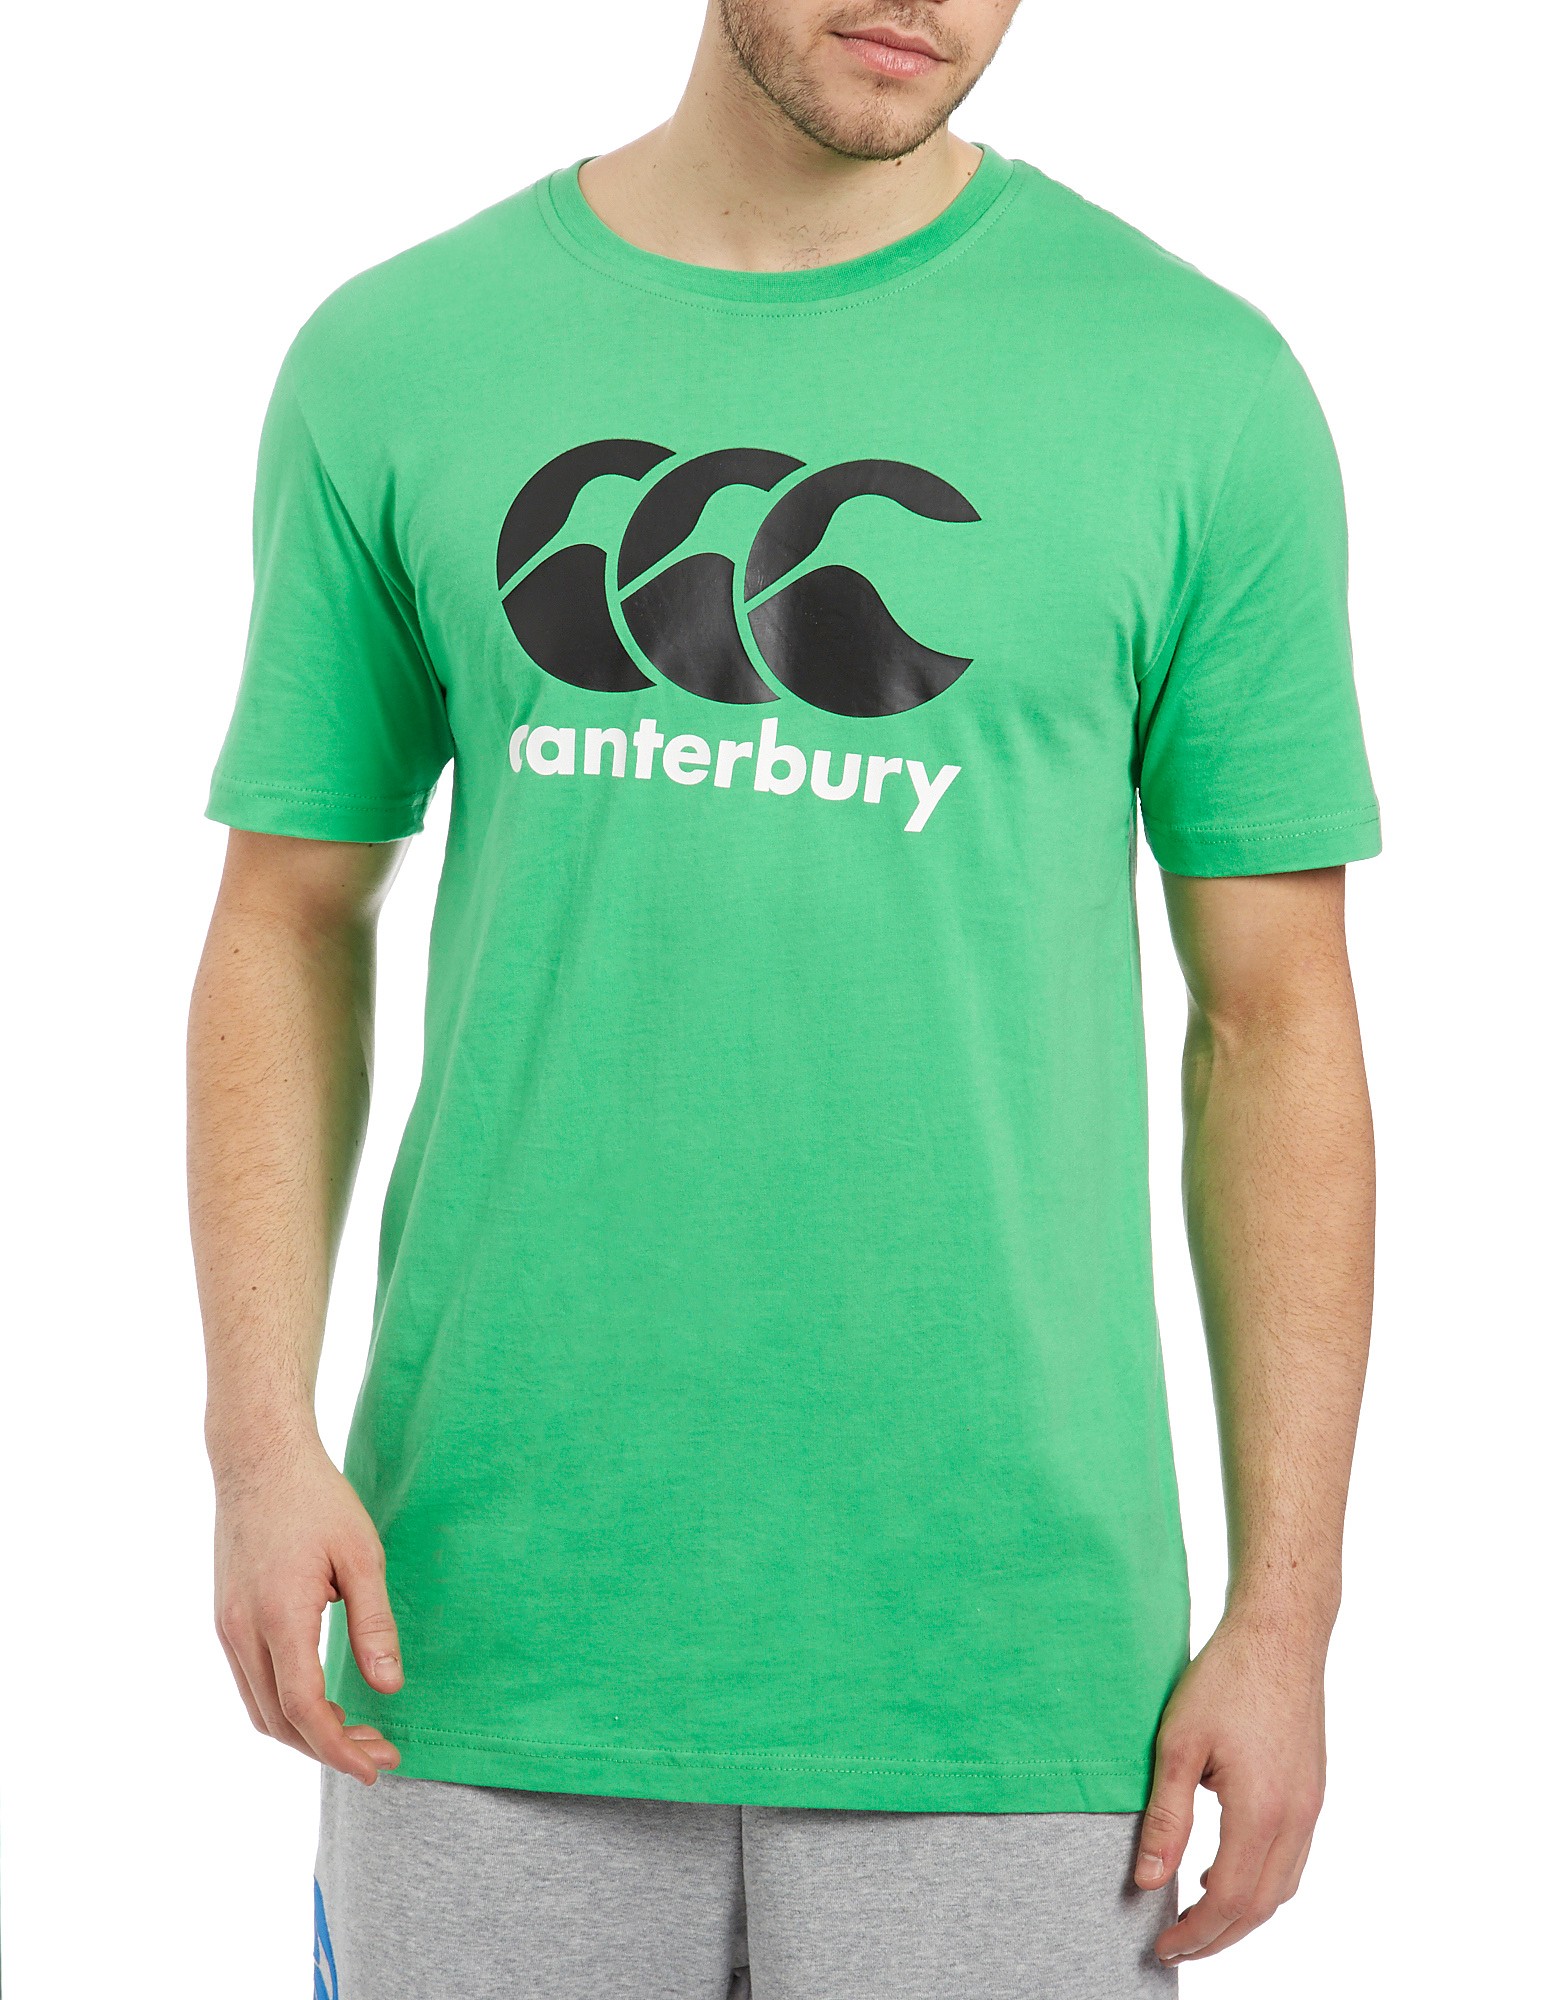 Canterbury CCC Logo T-Shirt